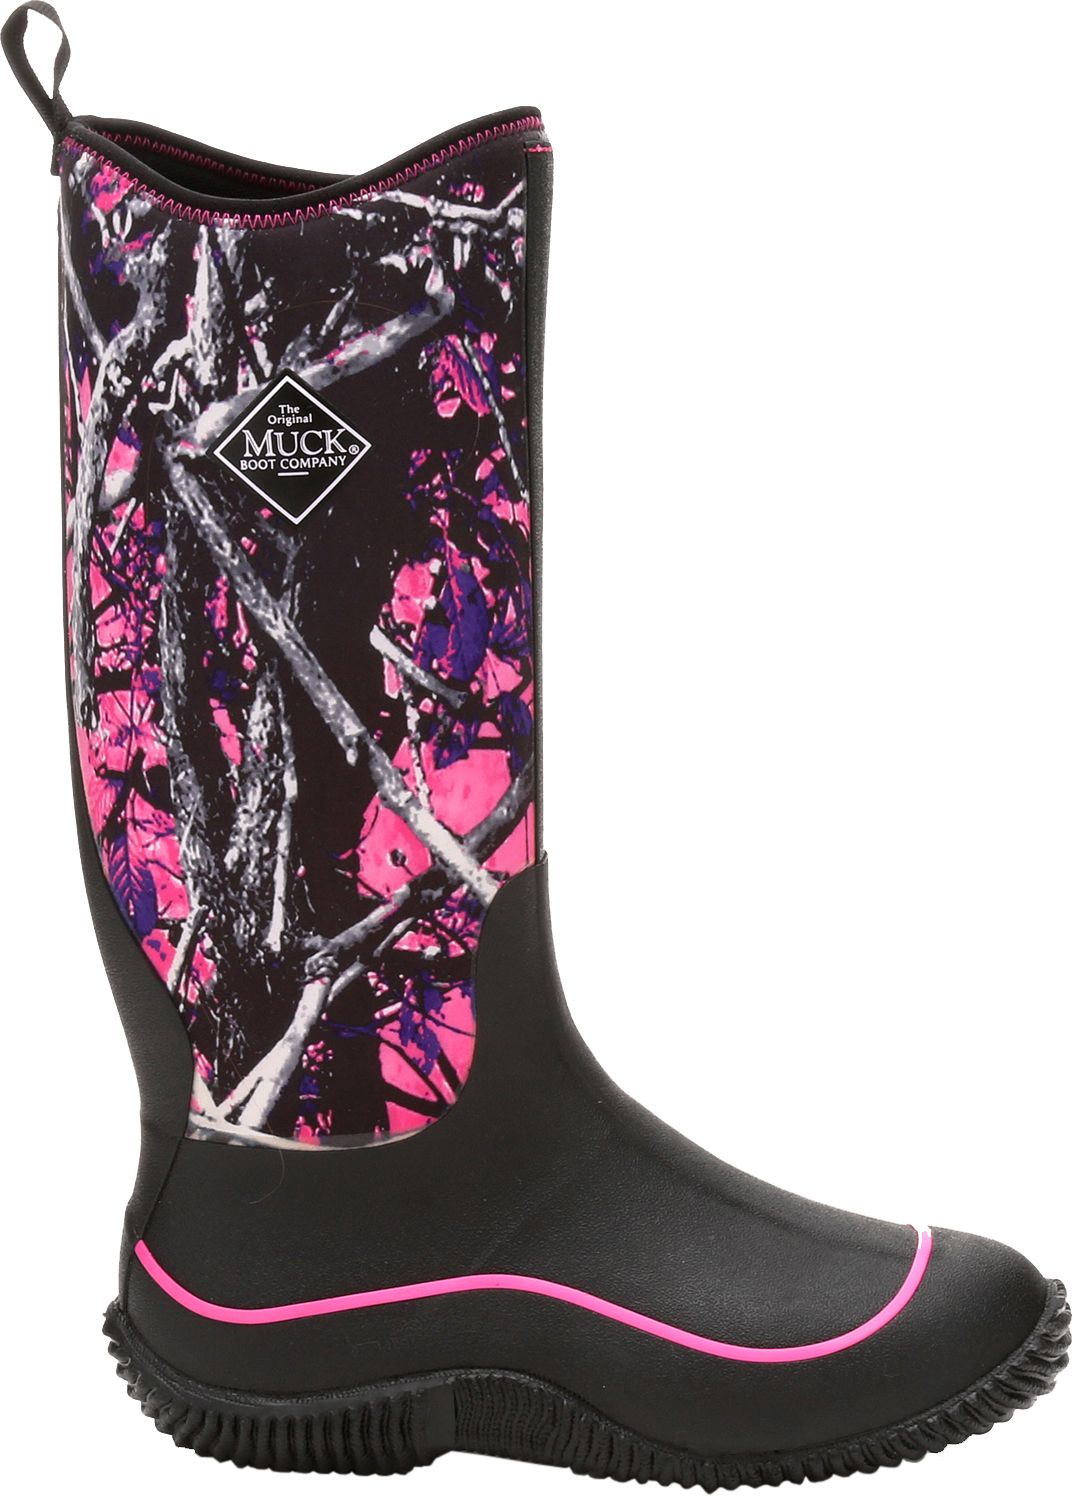 Hale Muddy Girl Waterproof Winter Boots 